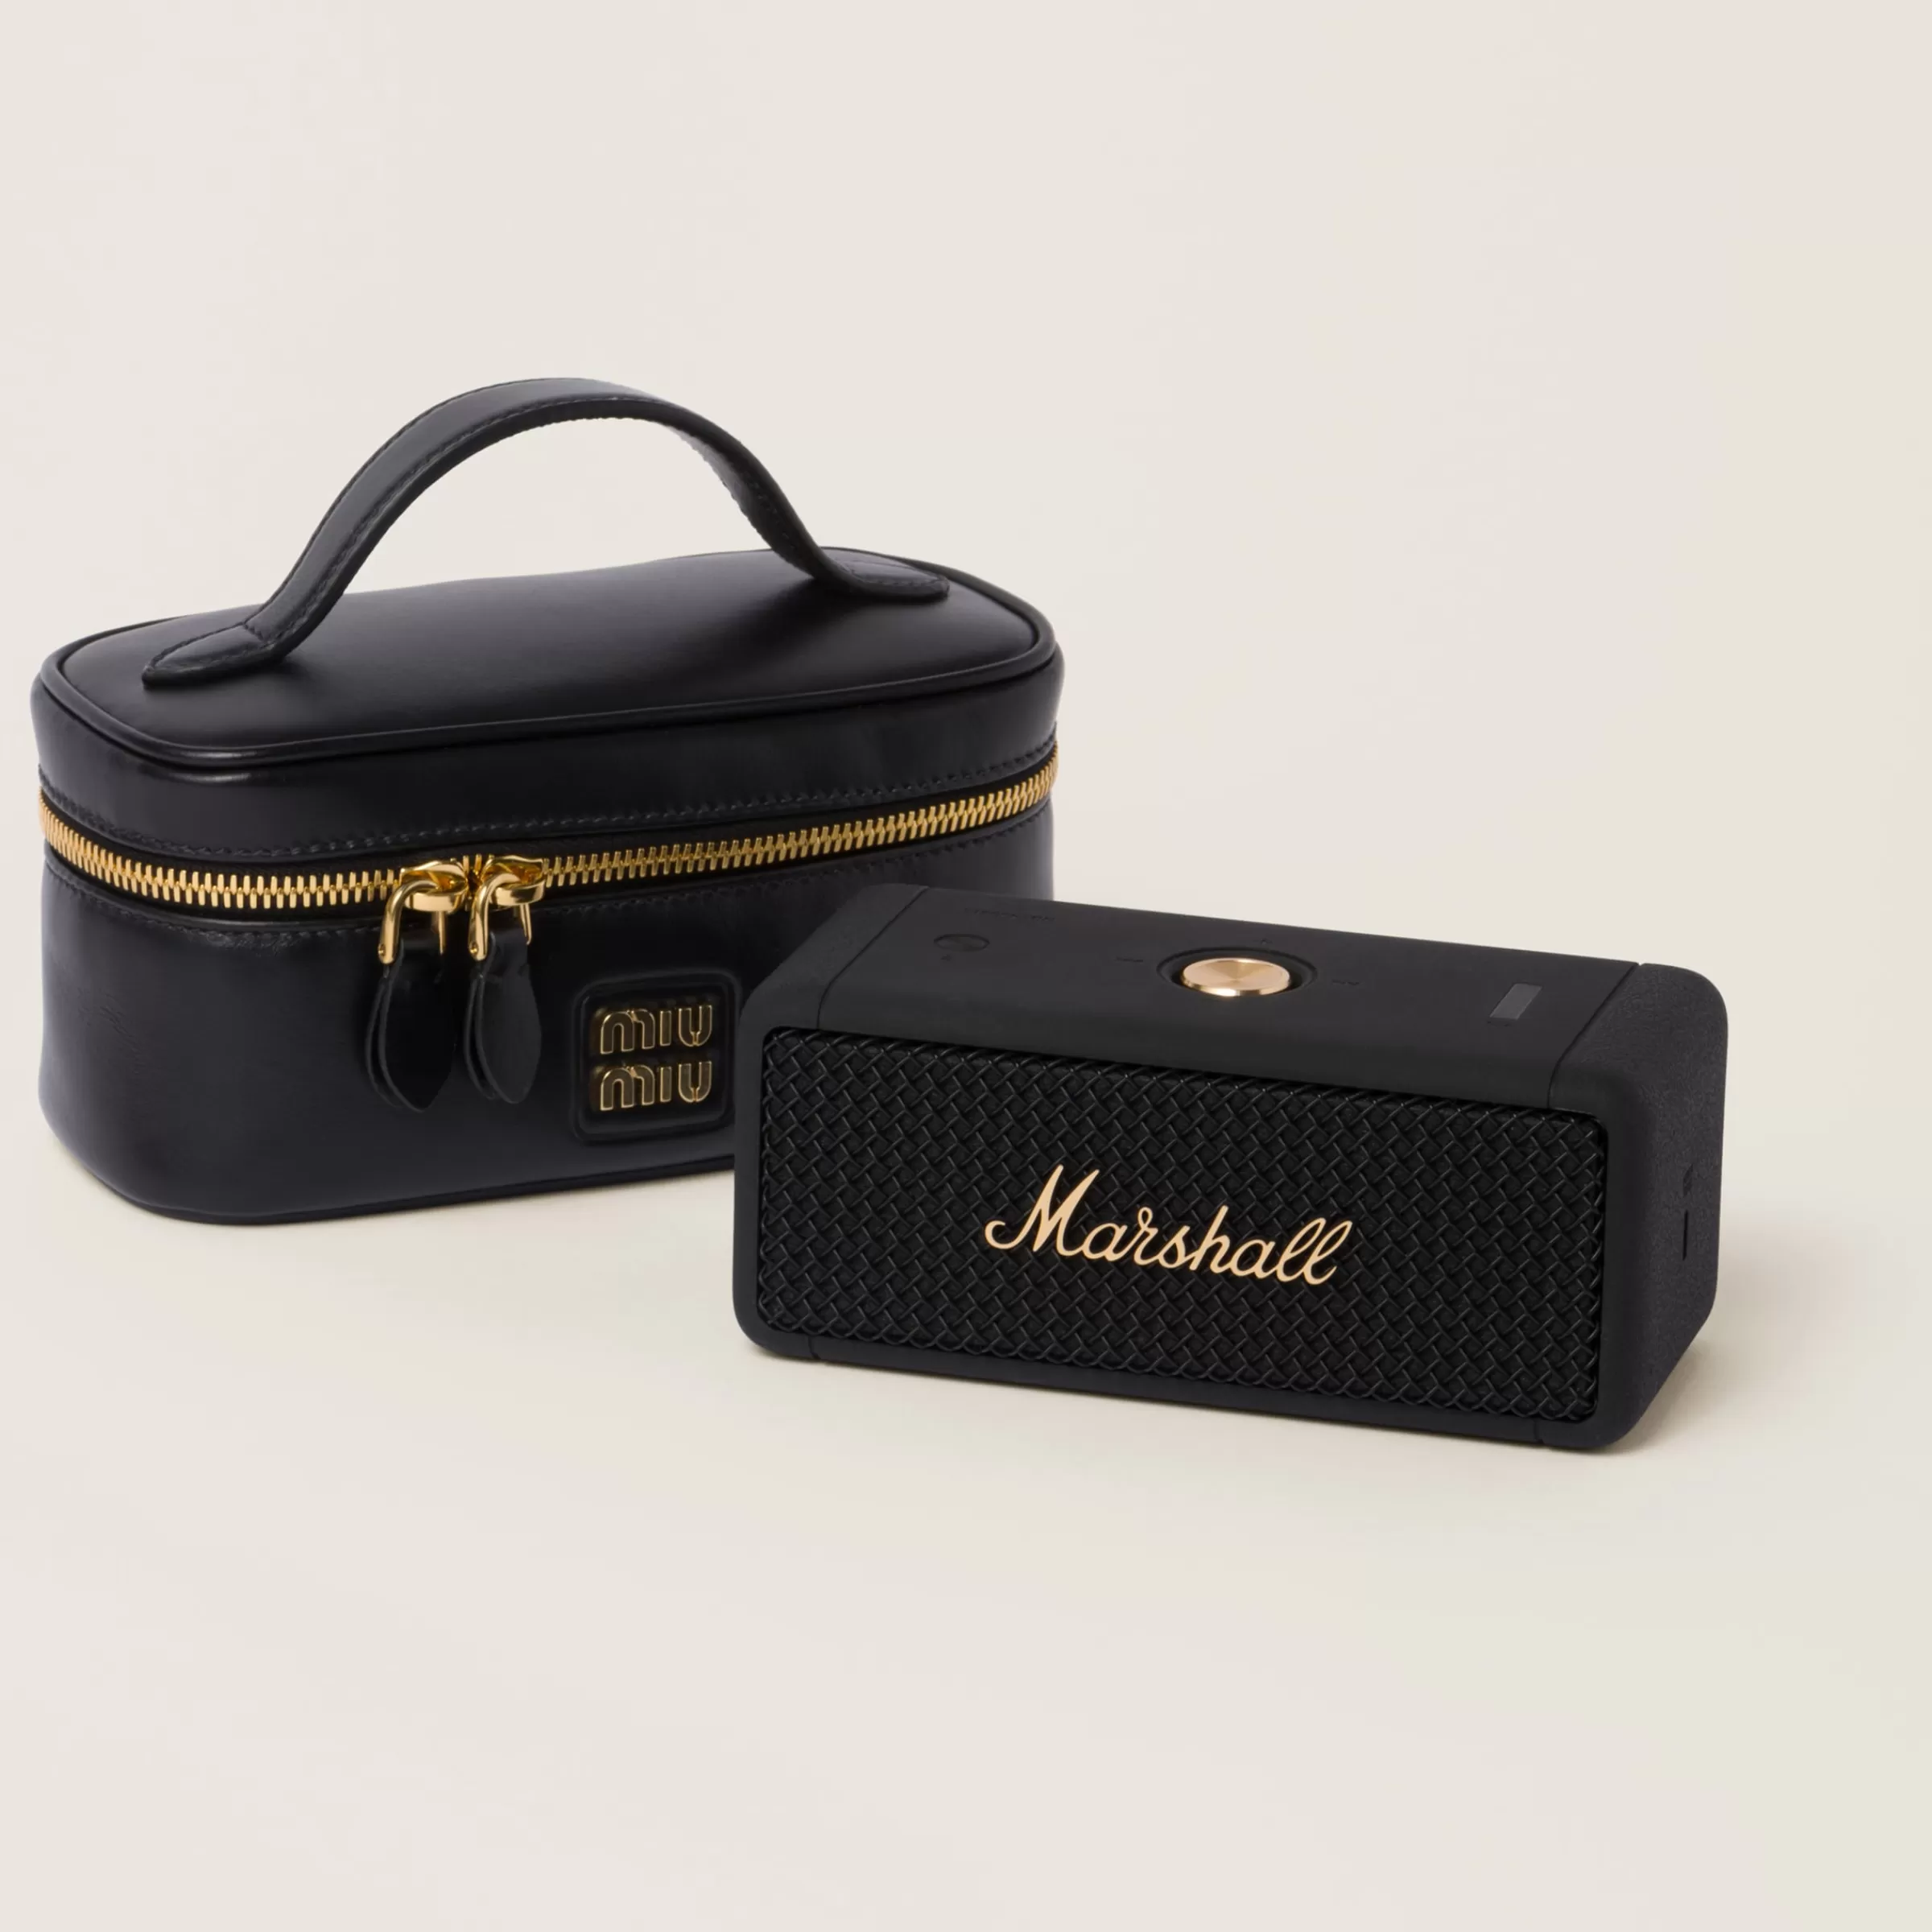 Miu Miu Marshall X Speaker With Leather Case |